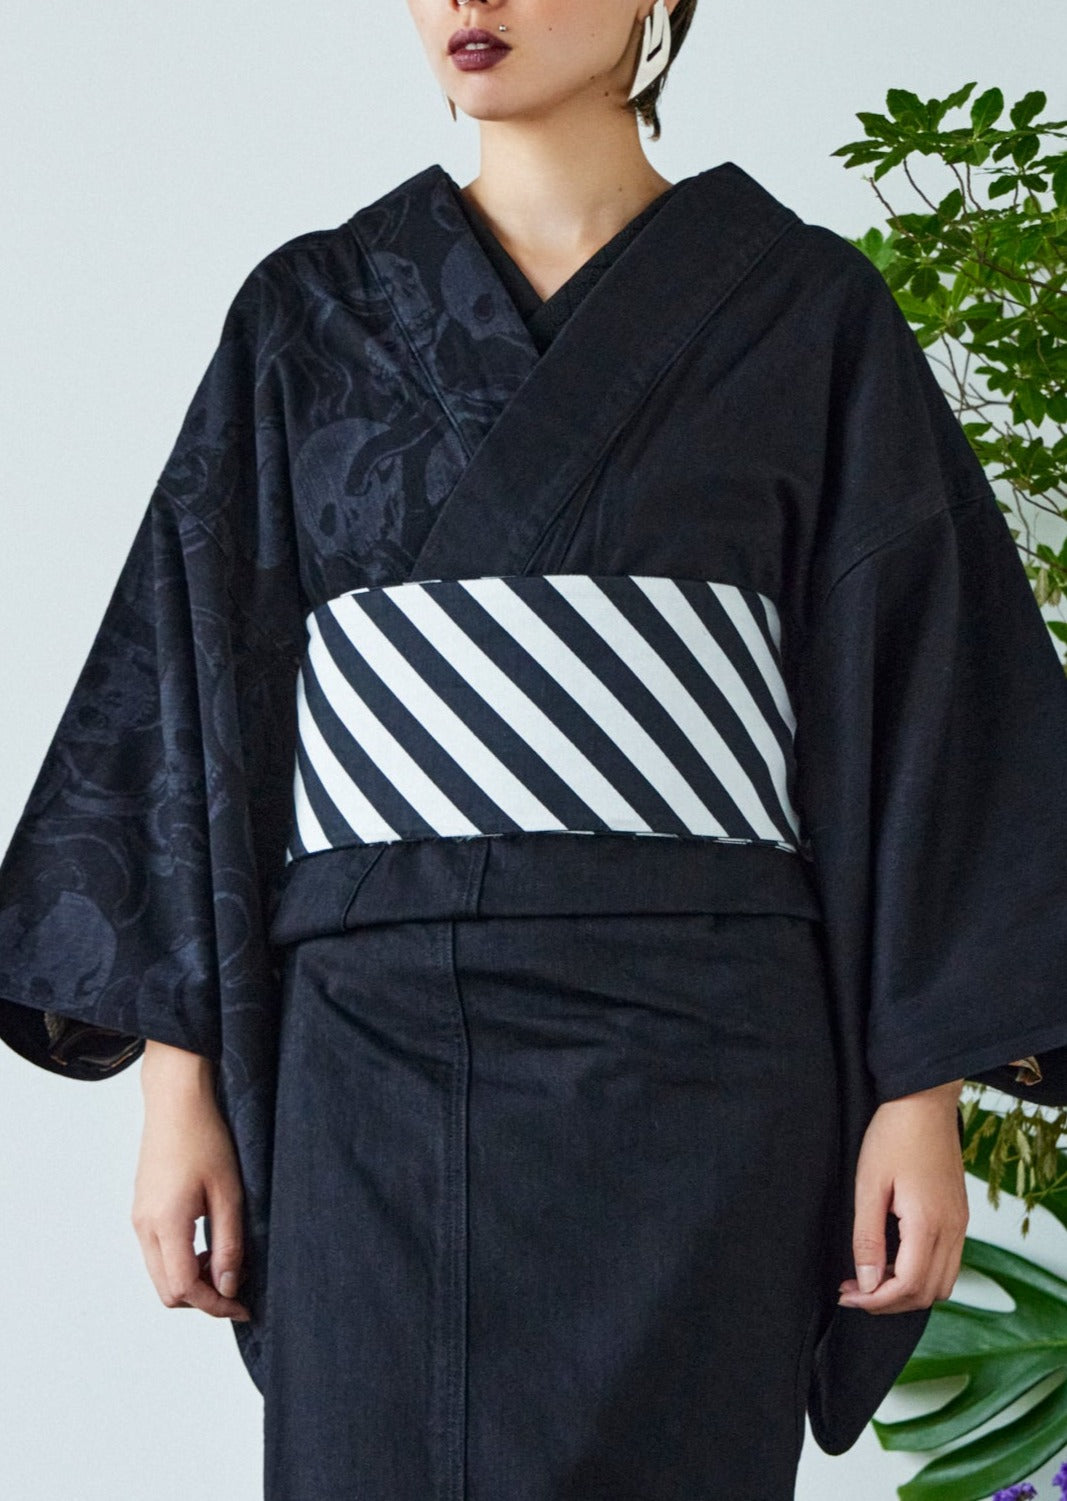 Half-width obi "Diagonal striped pattern" KAPUKI original Antique reproduction pattern: Pure silk